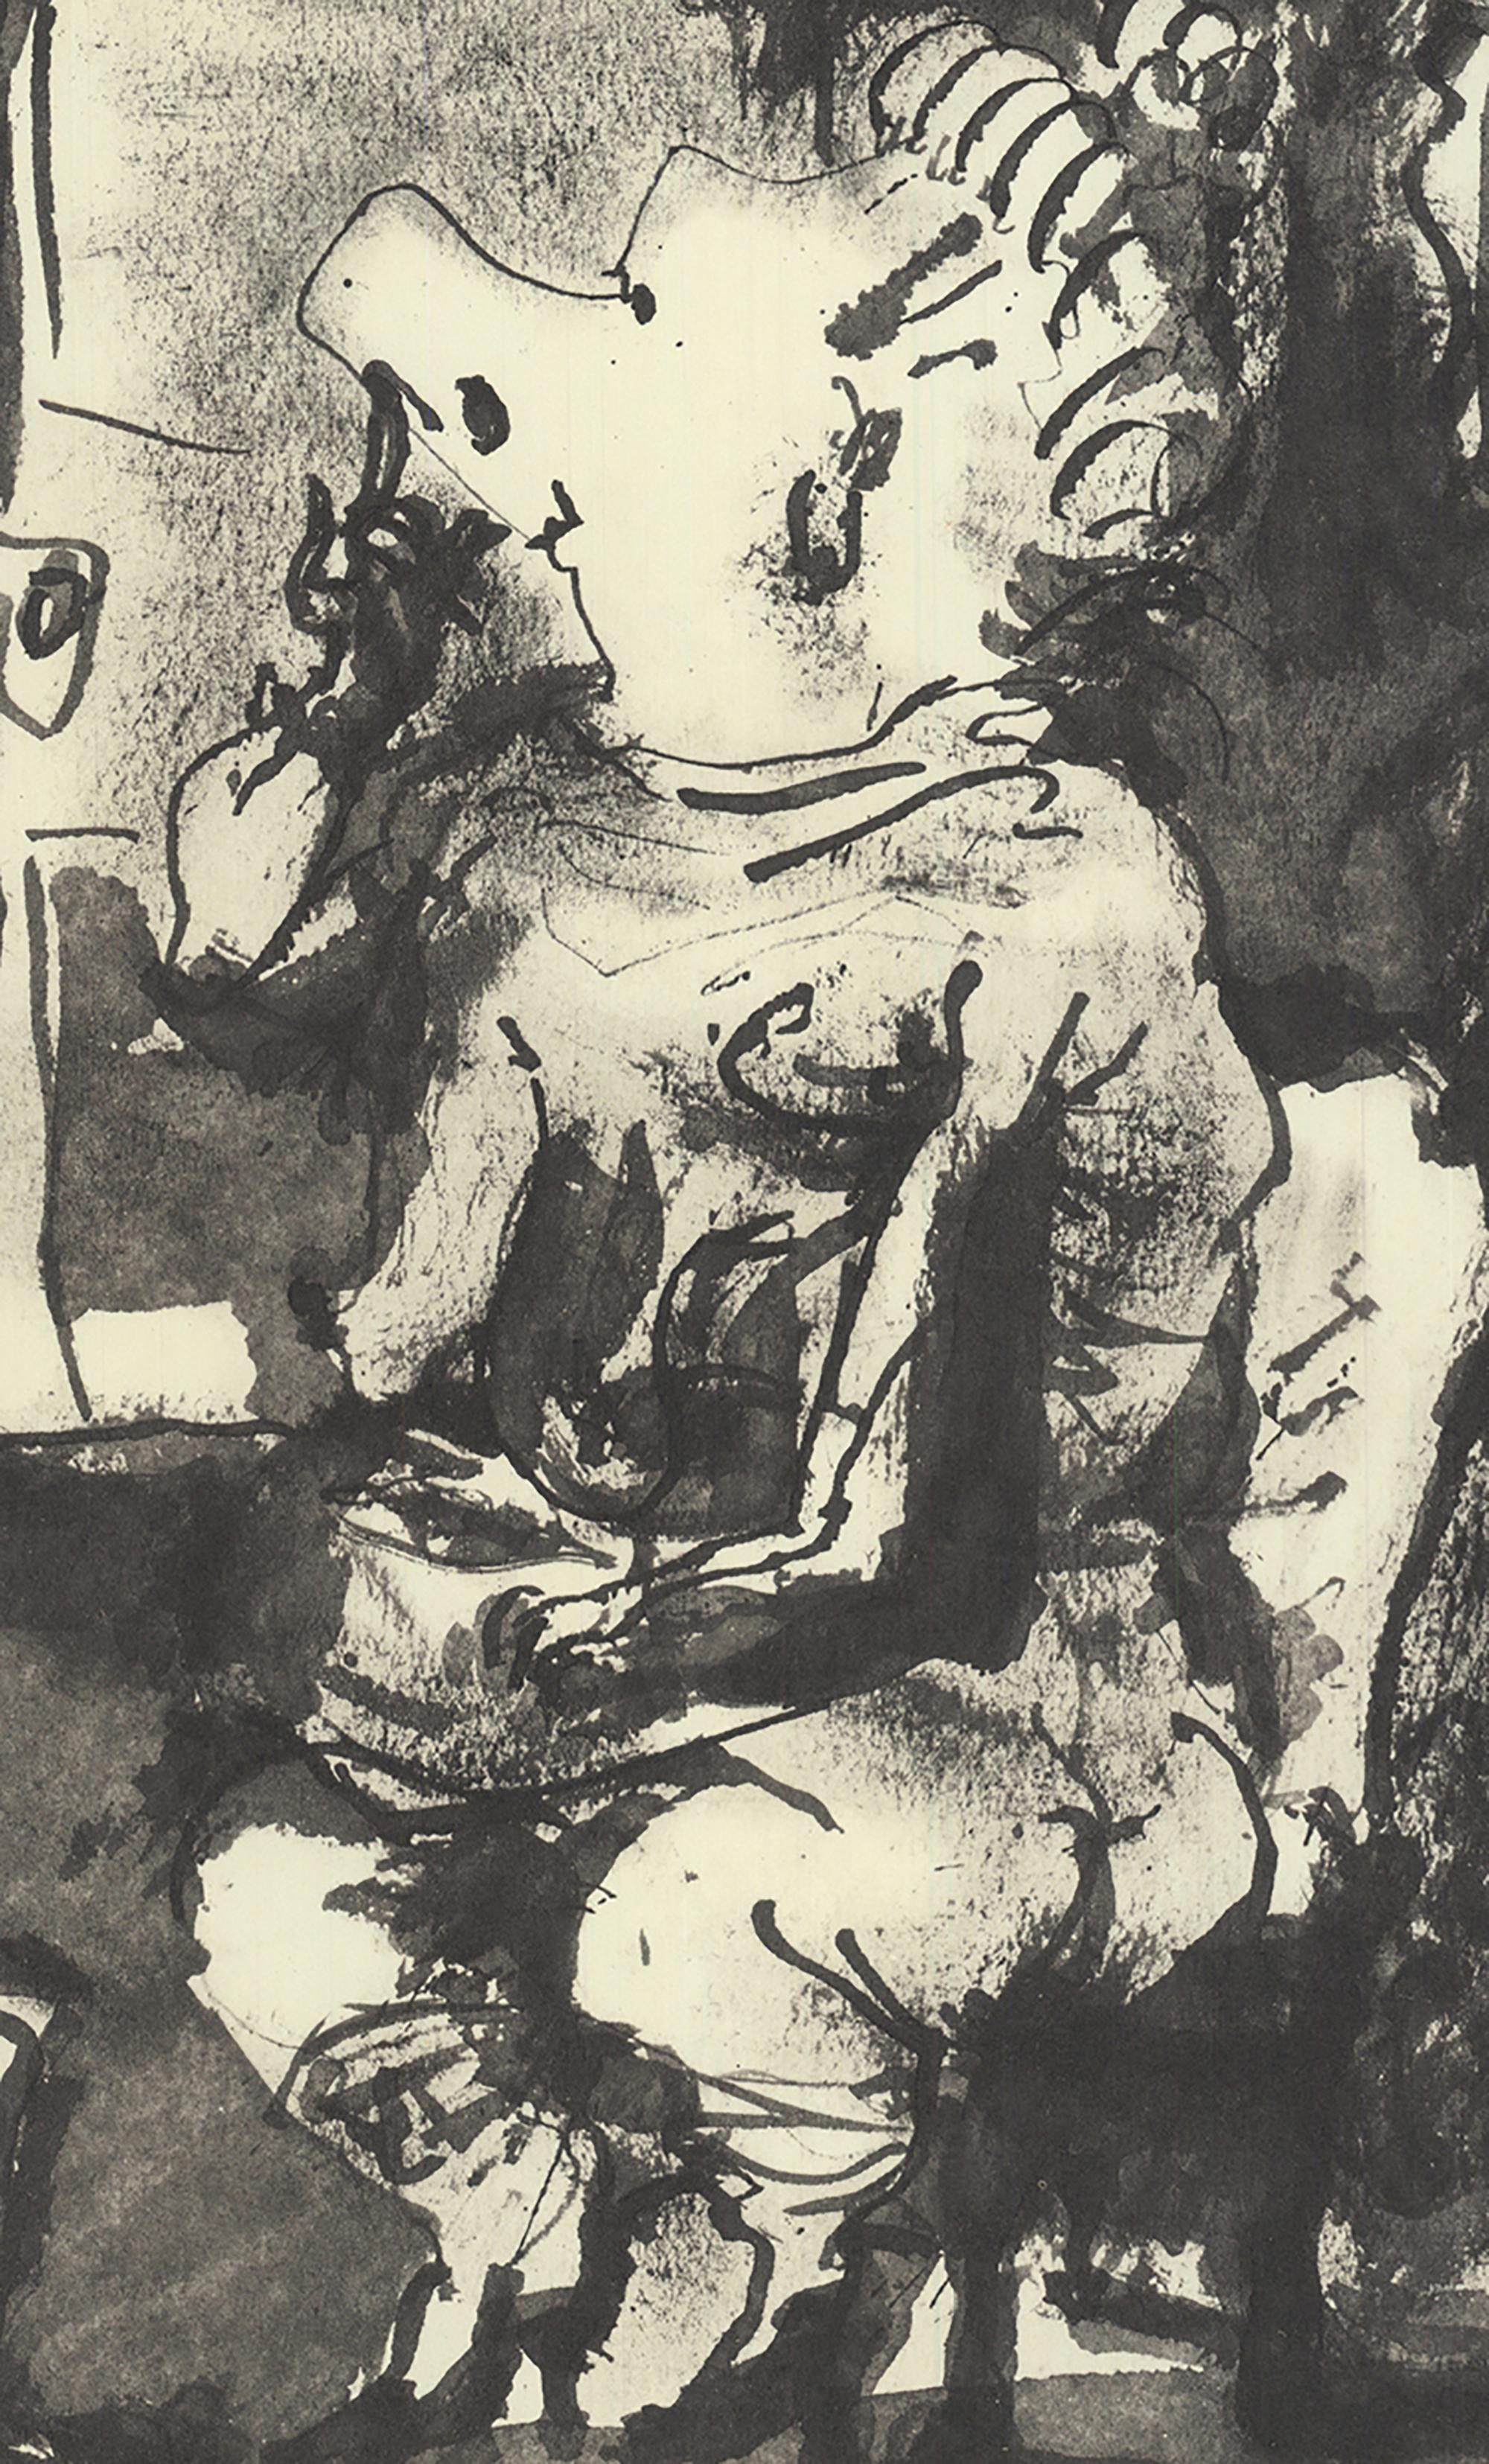 1959 Pablo Picasso 'Portrait of Man & Woman' Lithograph - Print by (after) Pablo Picasso